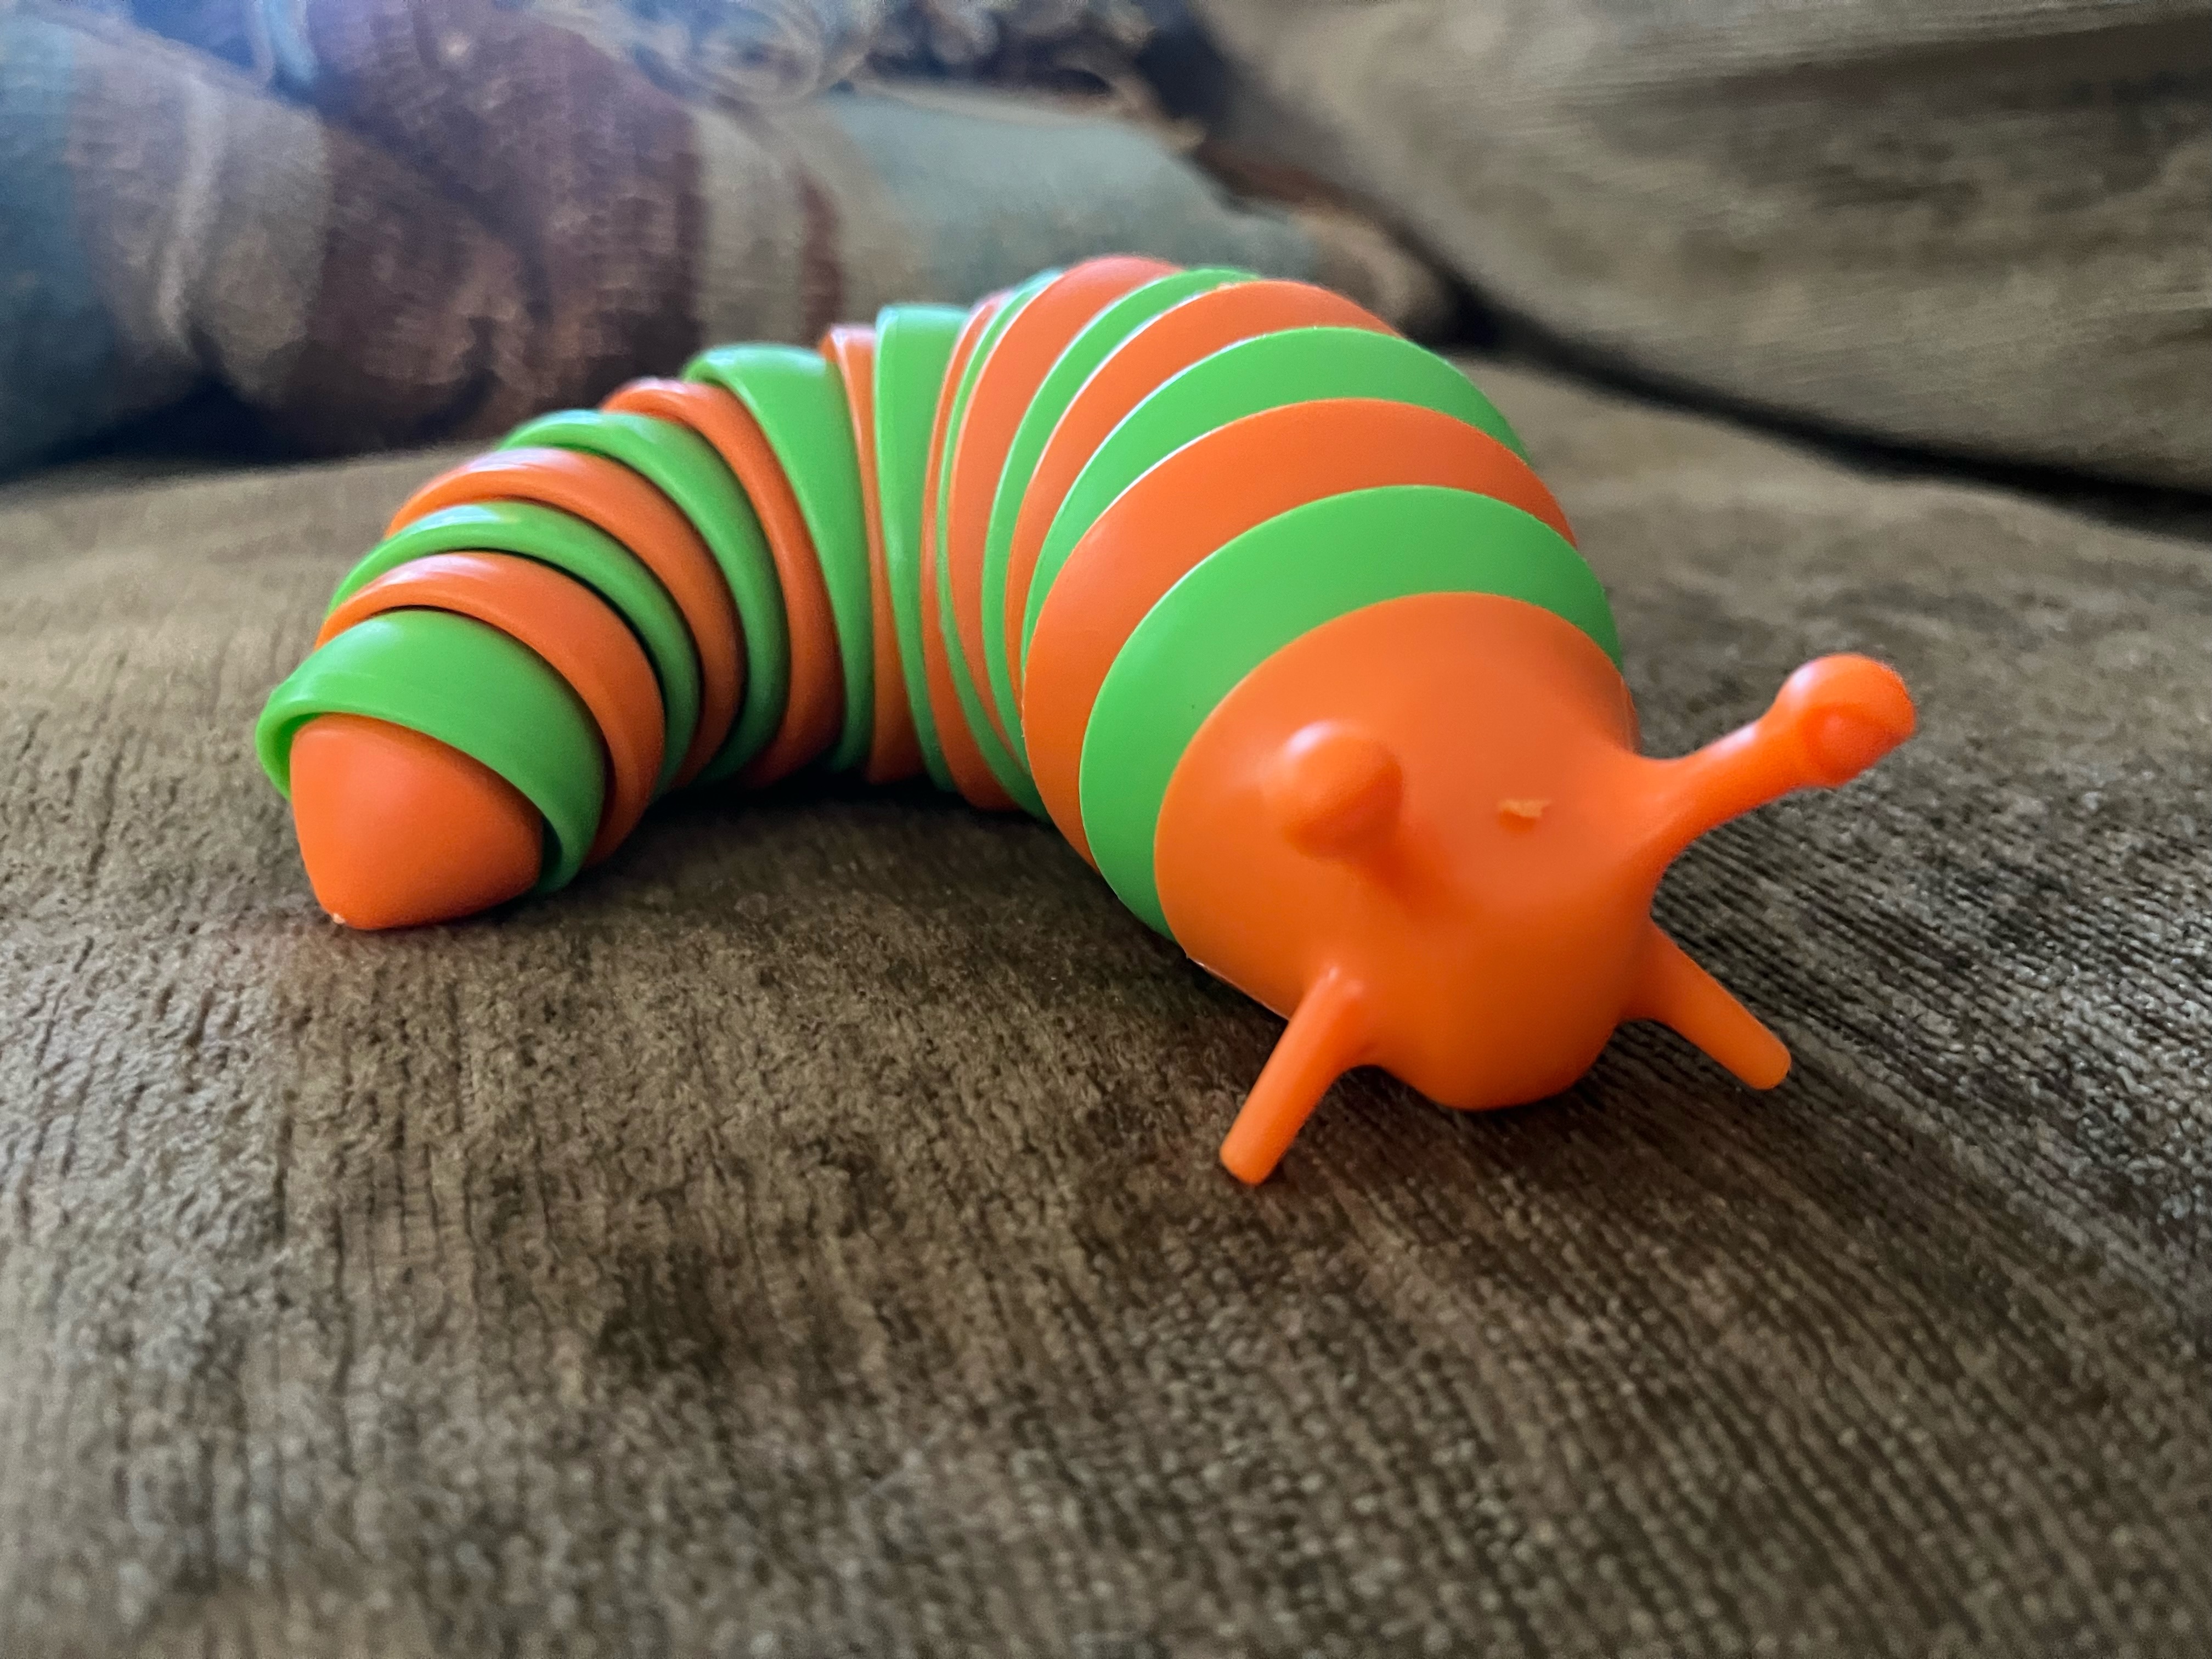 Why We Love This Slug Fidget Toy